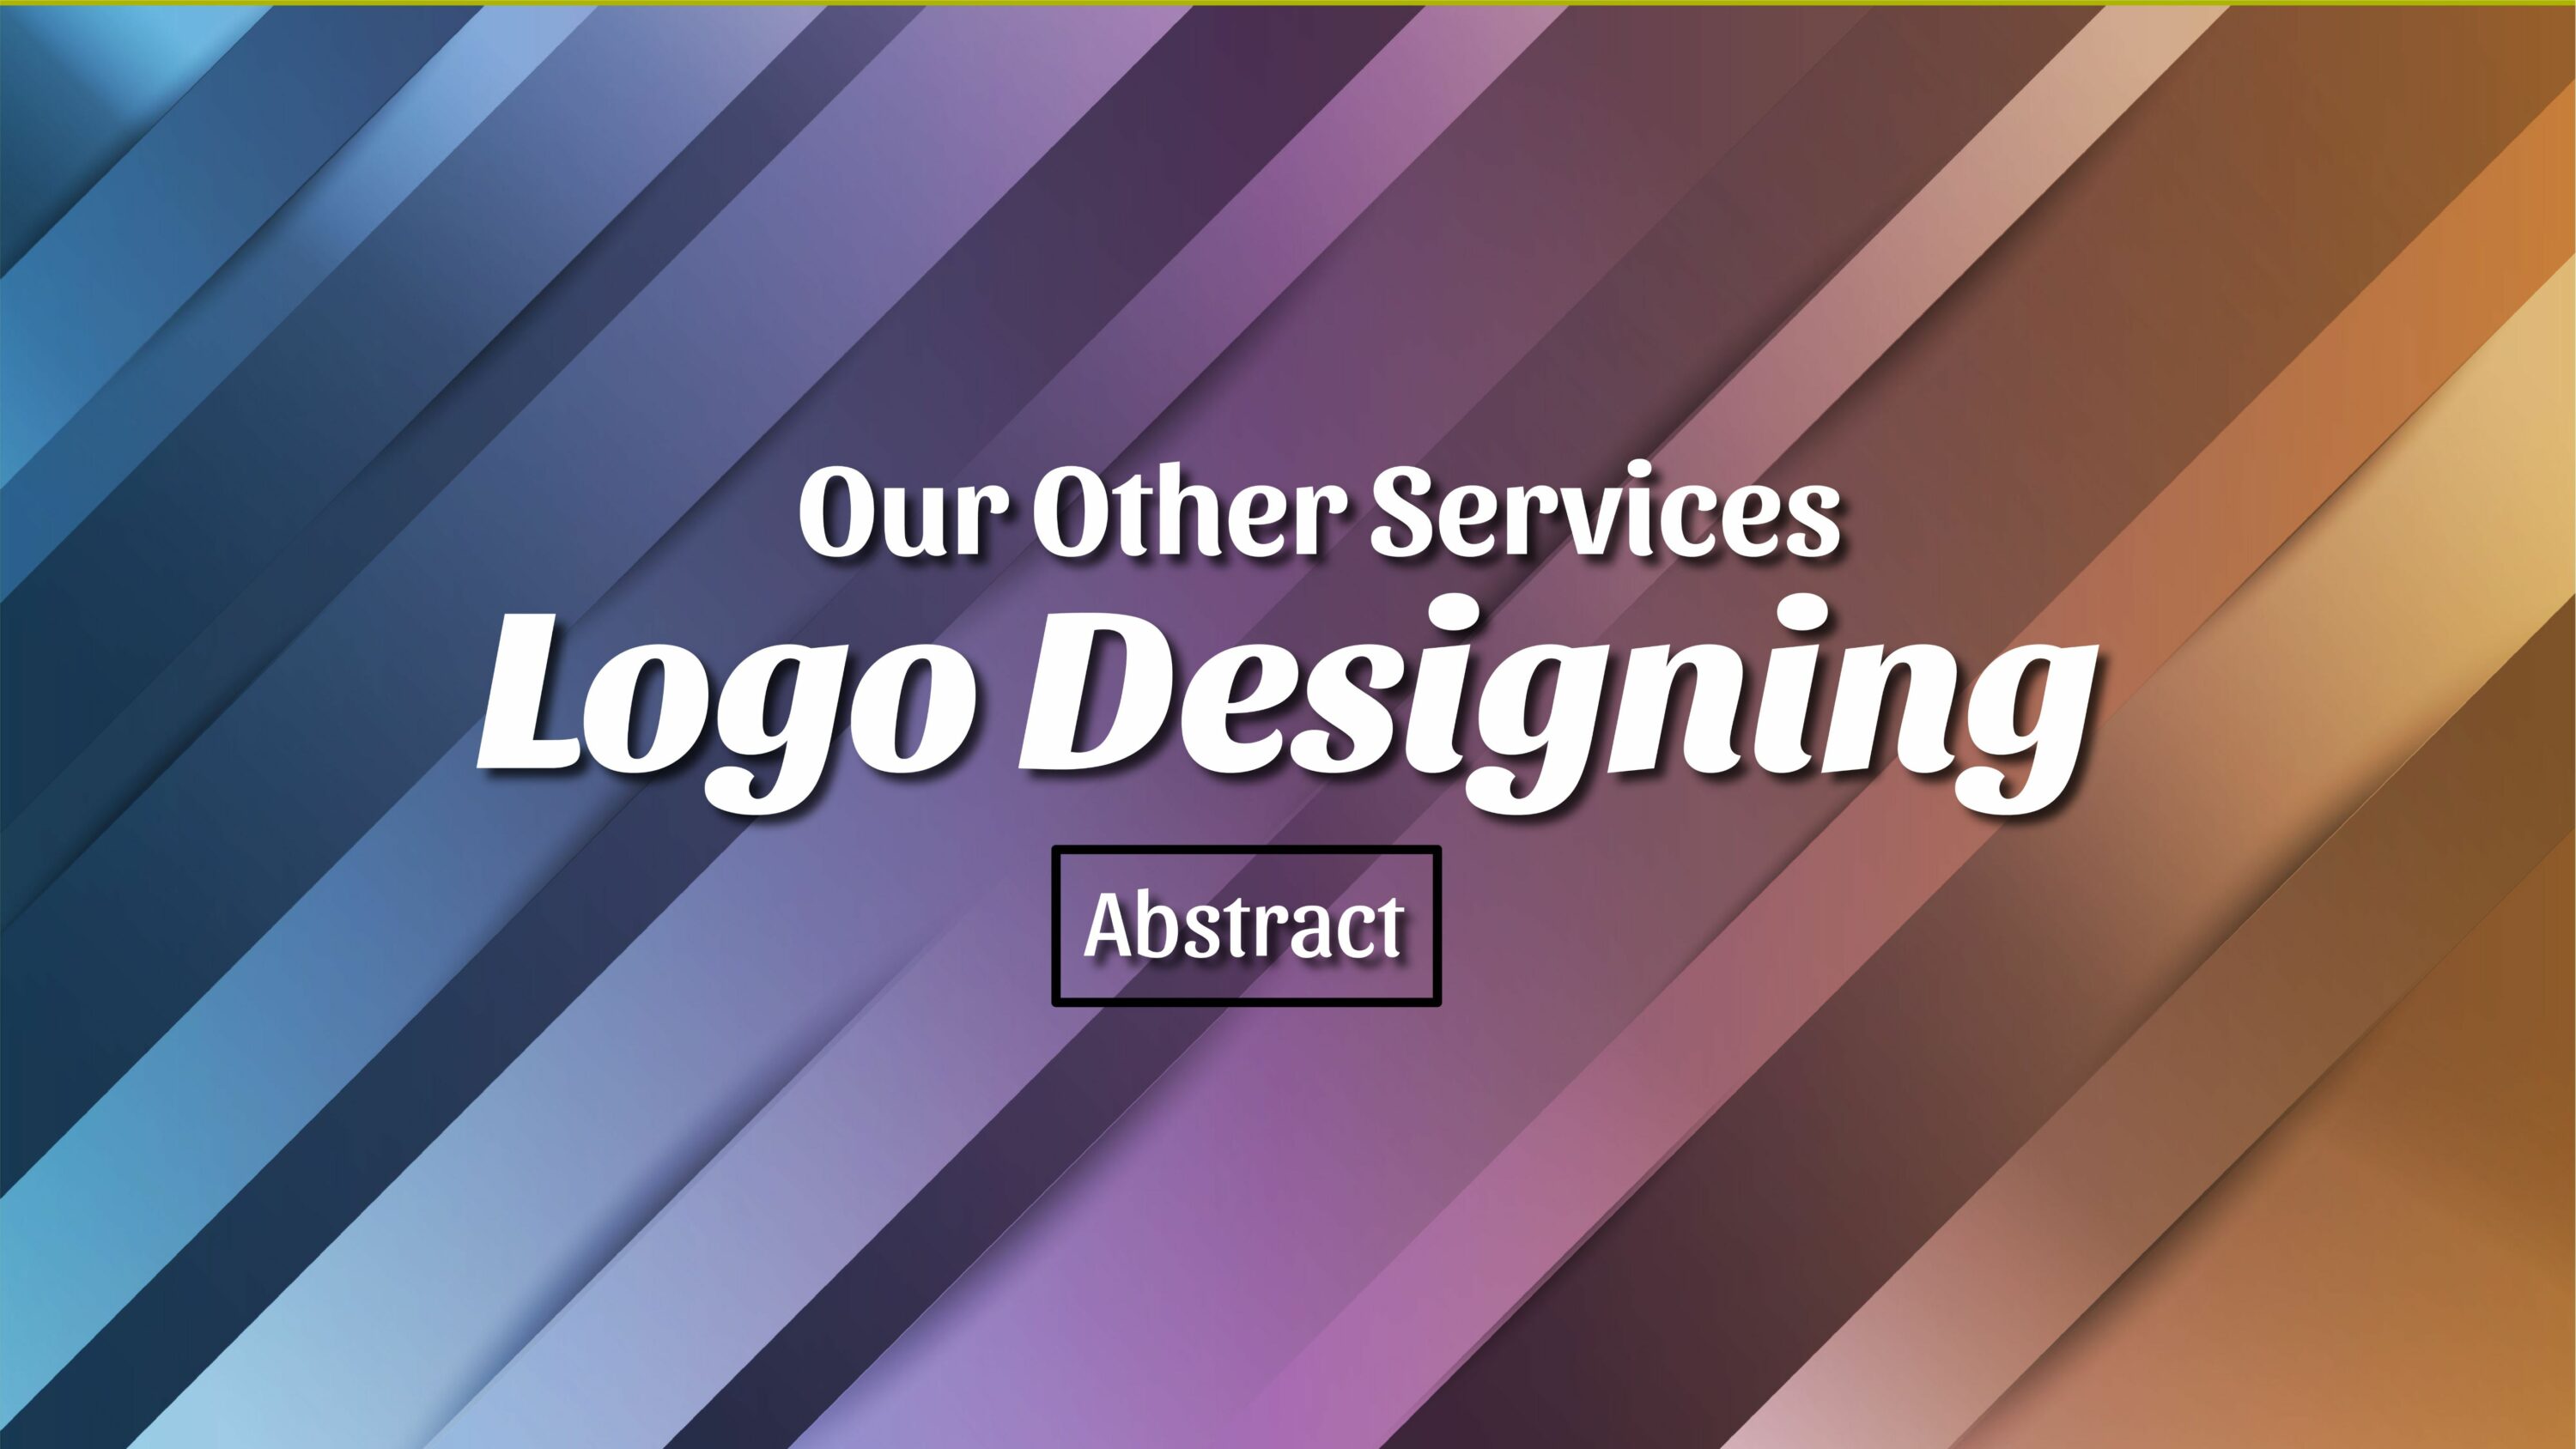 Metallic Sheets Background Pack, for logo design.